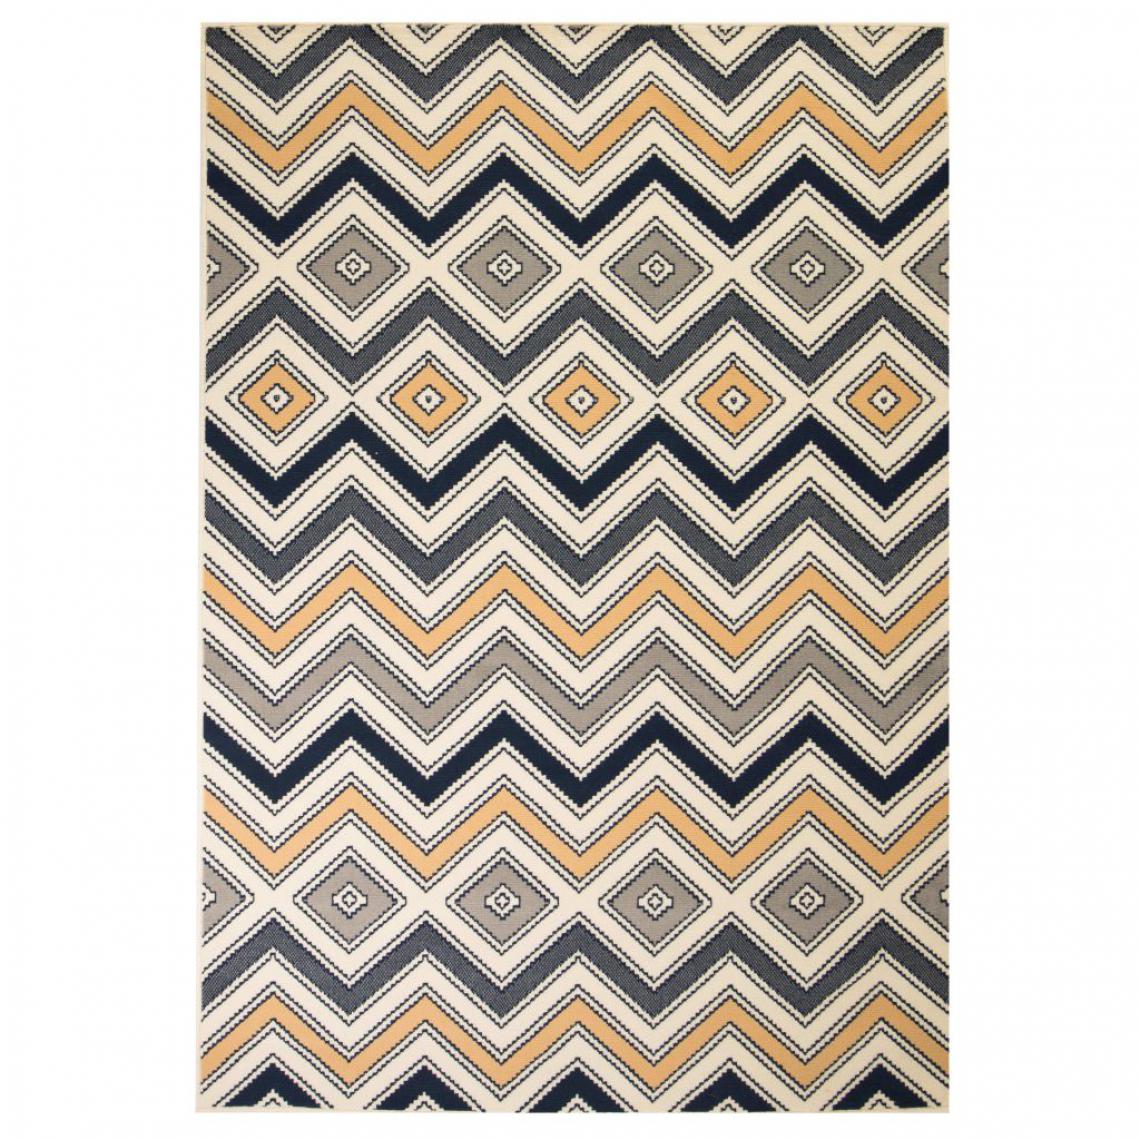 Chunhelife - Tapis moderne Design de zigzag 120 x 170 cm Marron/Noir/Bleu - Tapis